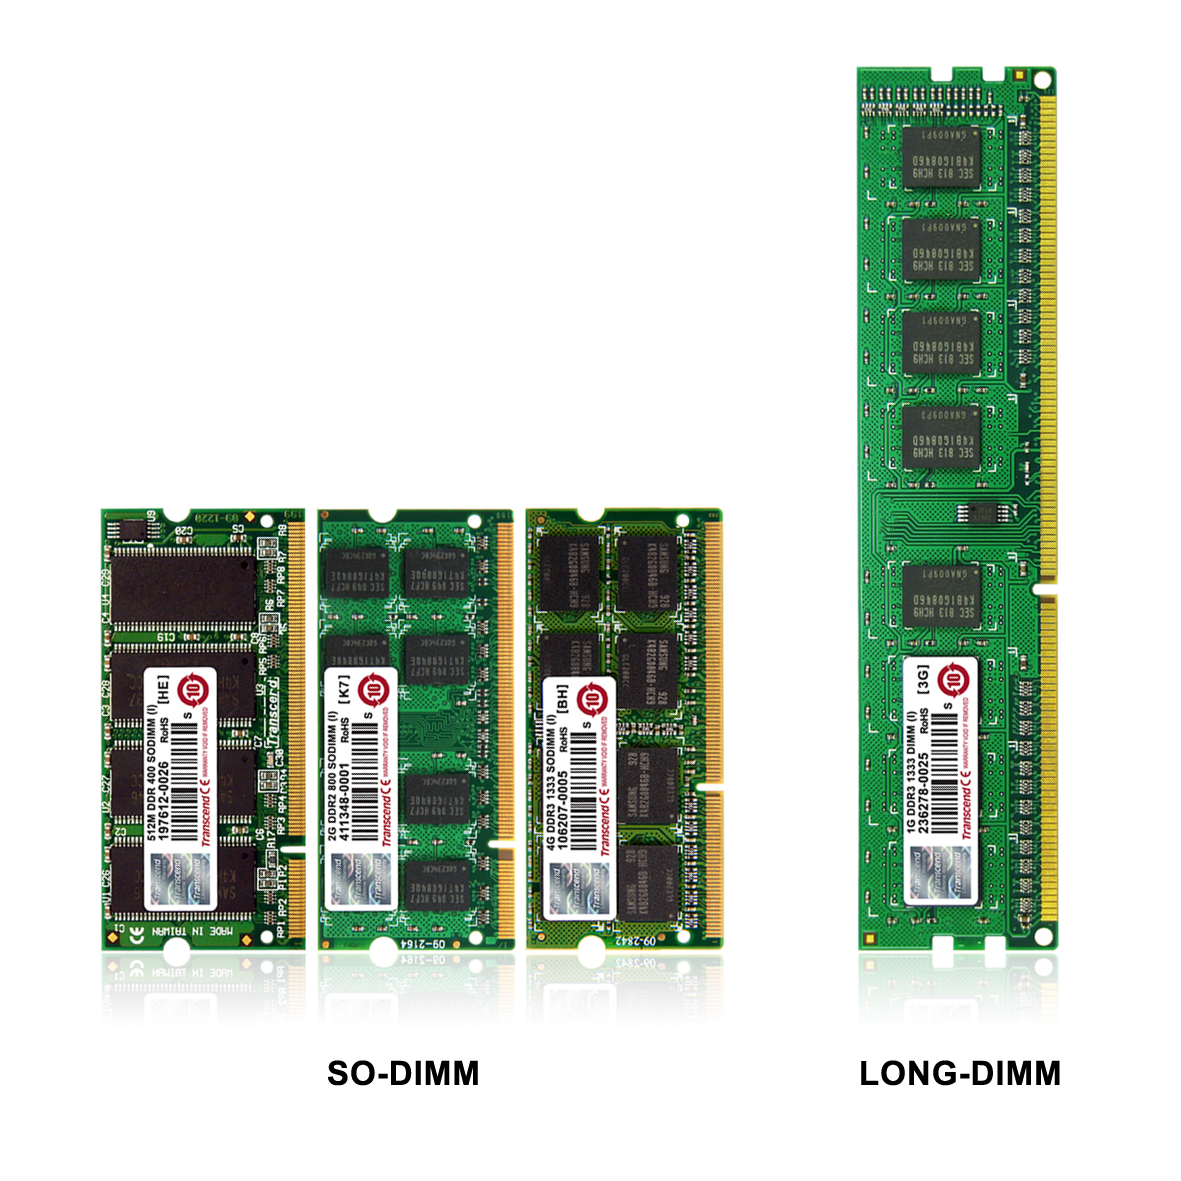 Тип памяти dimm. Форм факторы оперативной памяти ddr4. Оперативная память типы и виды so DIMM ddr2. Форм-фактор оперативной памяти DIMM. Оперативная память Simm, DIMM DDR.